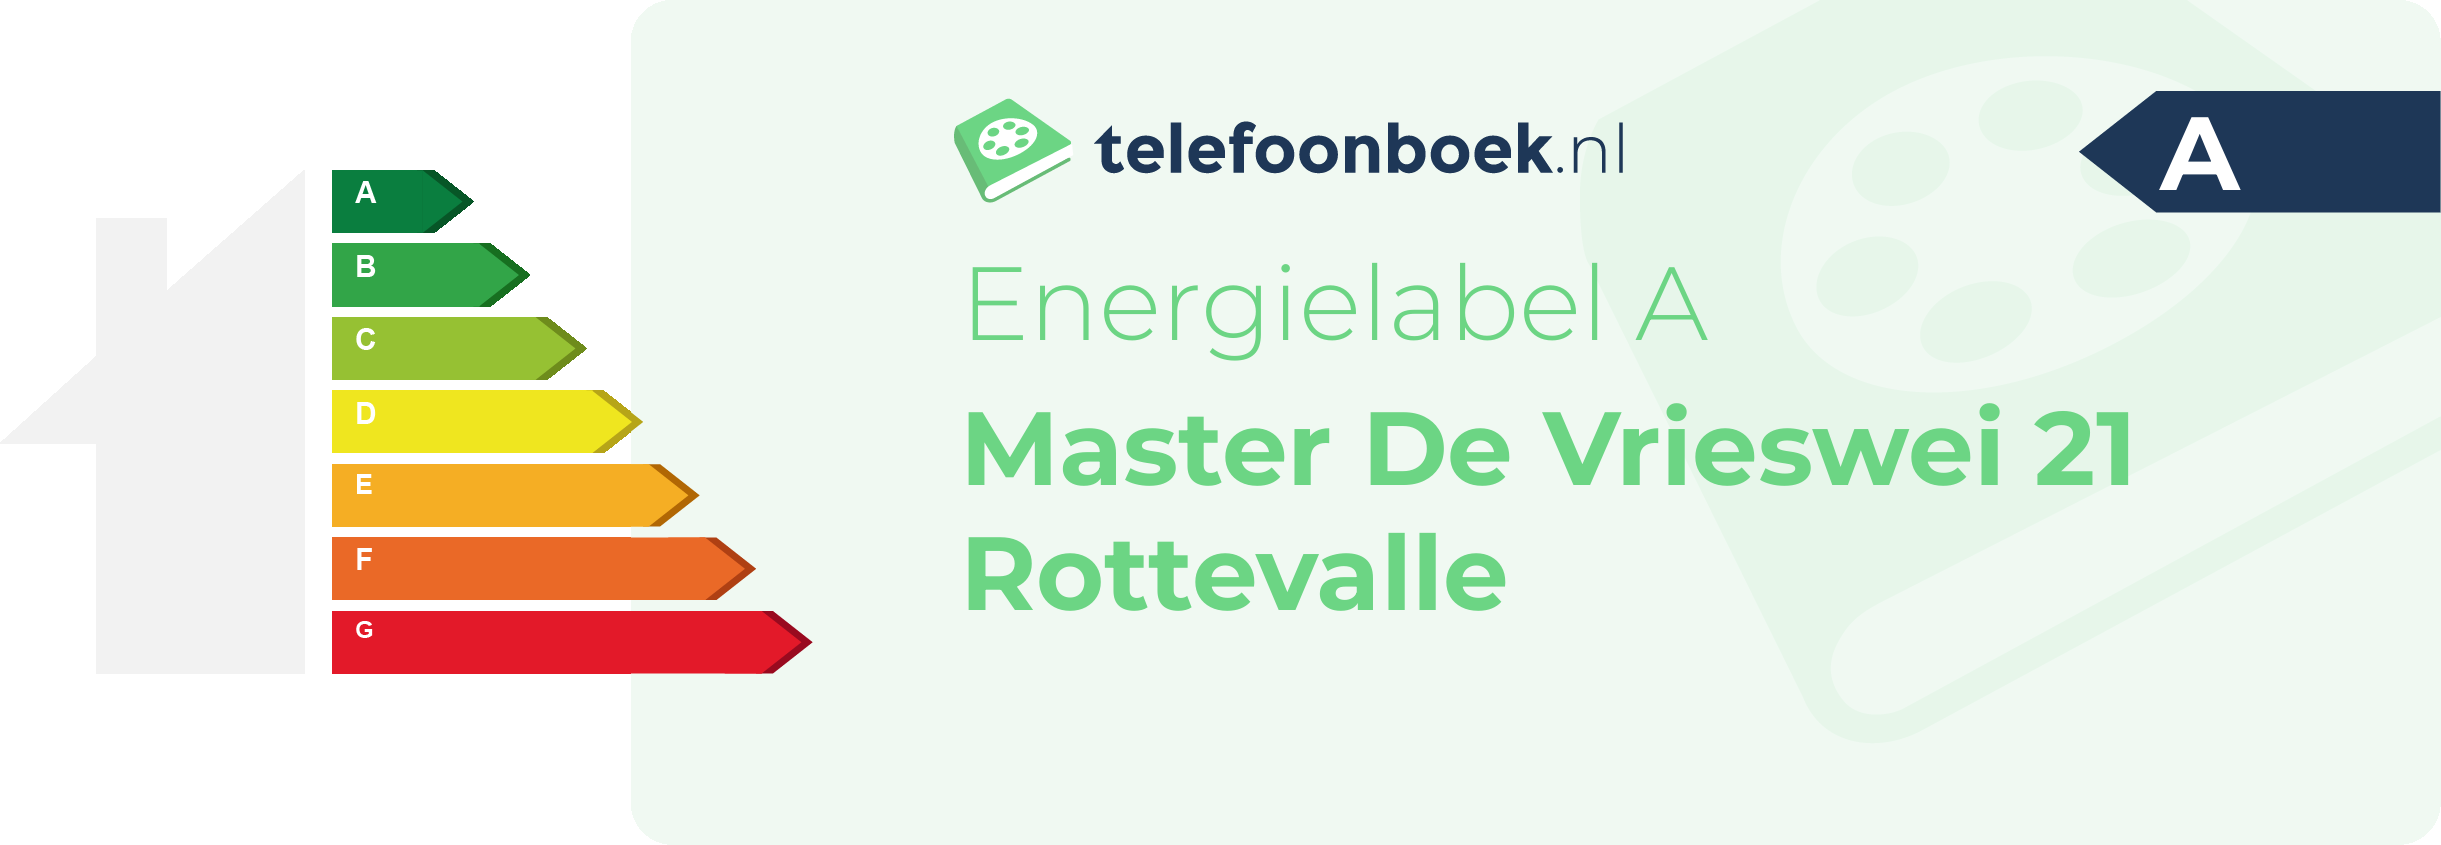 Energielabel Master De Vrieswei 21 Rottevalle